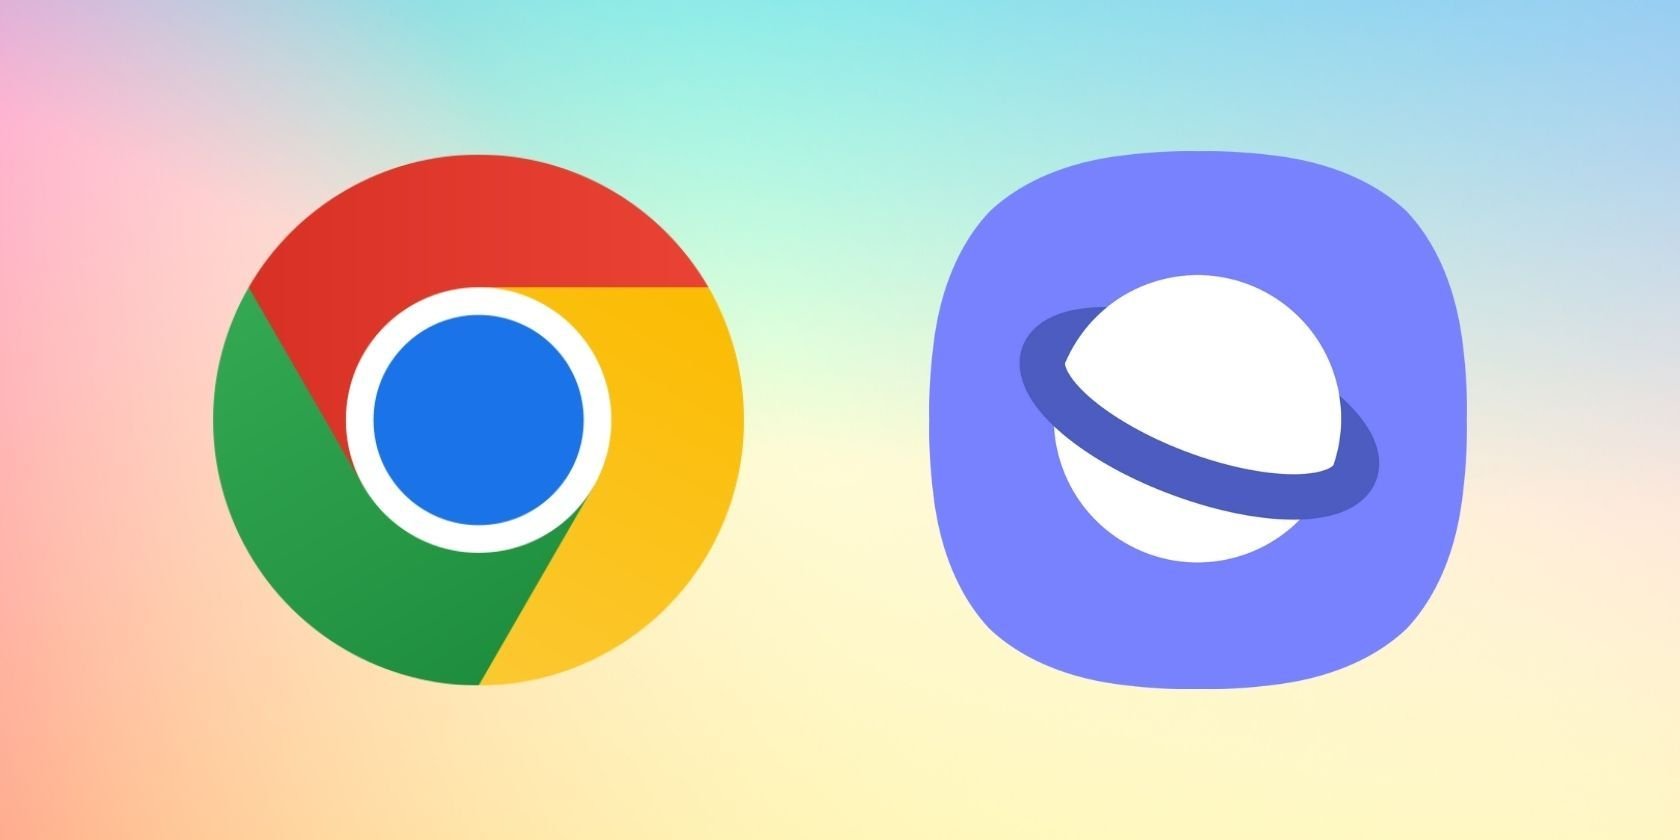 Google Chrome ve Samsung Internet Hangi Android Tarayıcısı Daha İyi?